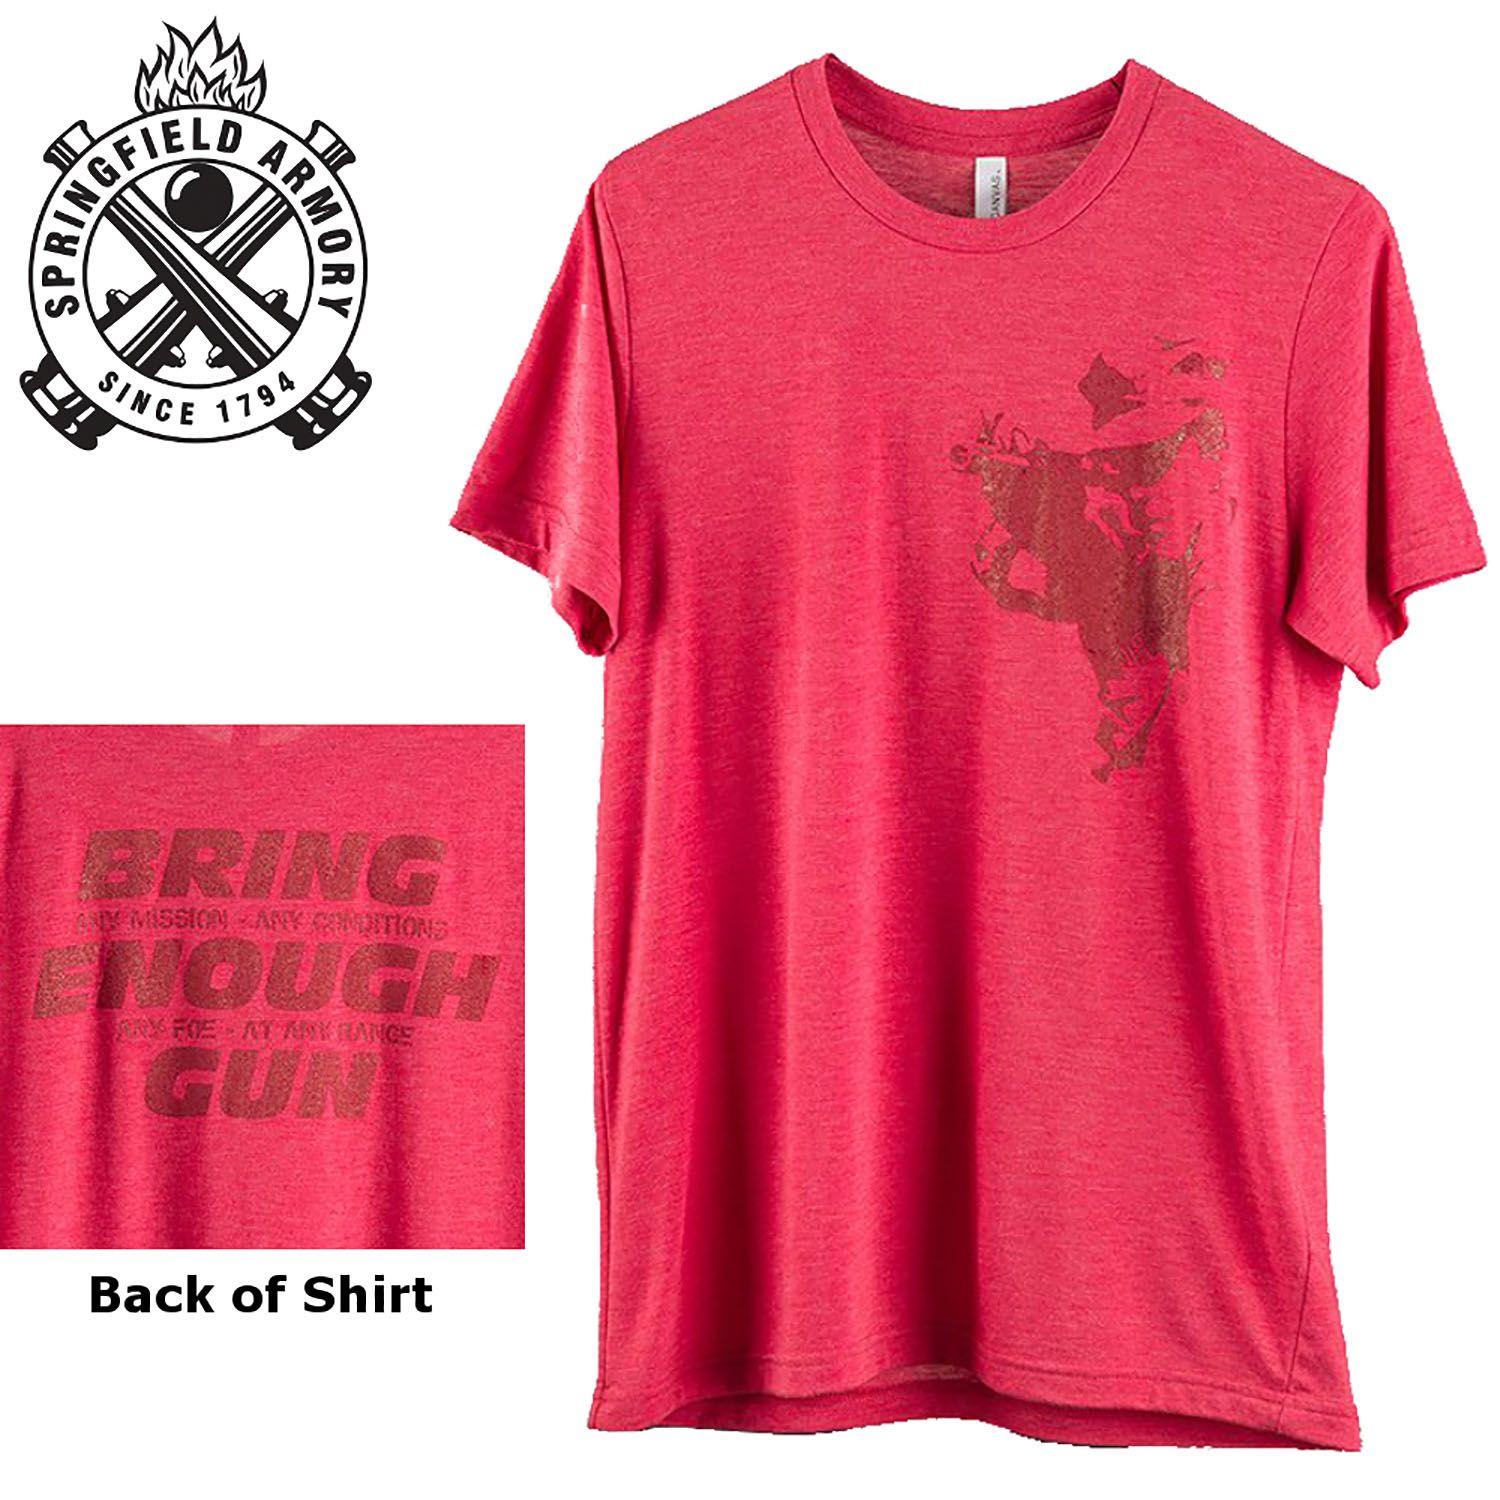 Springfield Armory Shooter Logo - Springfield Armory Shooter Logo T-Shirt, Red: MGW